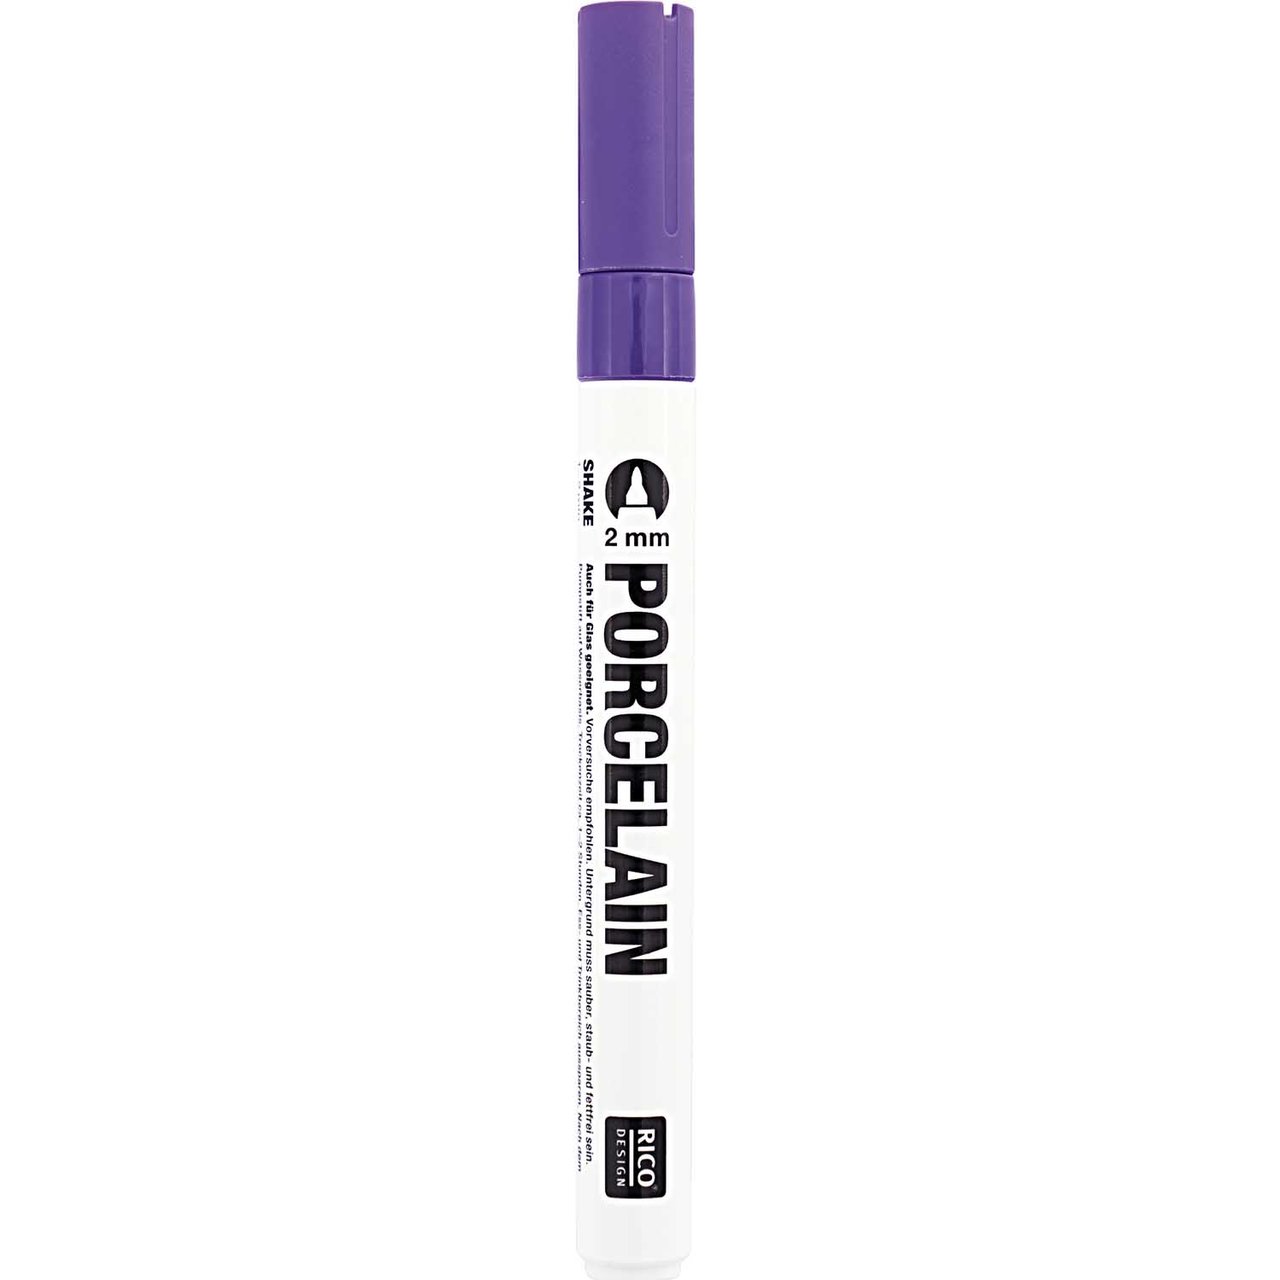 Rico Design Porzellanmarker 2mm violett